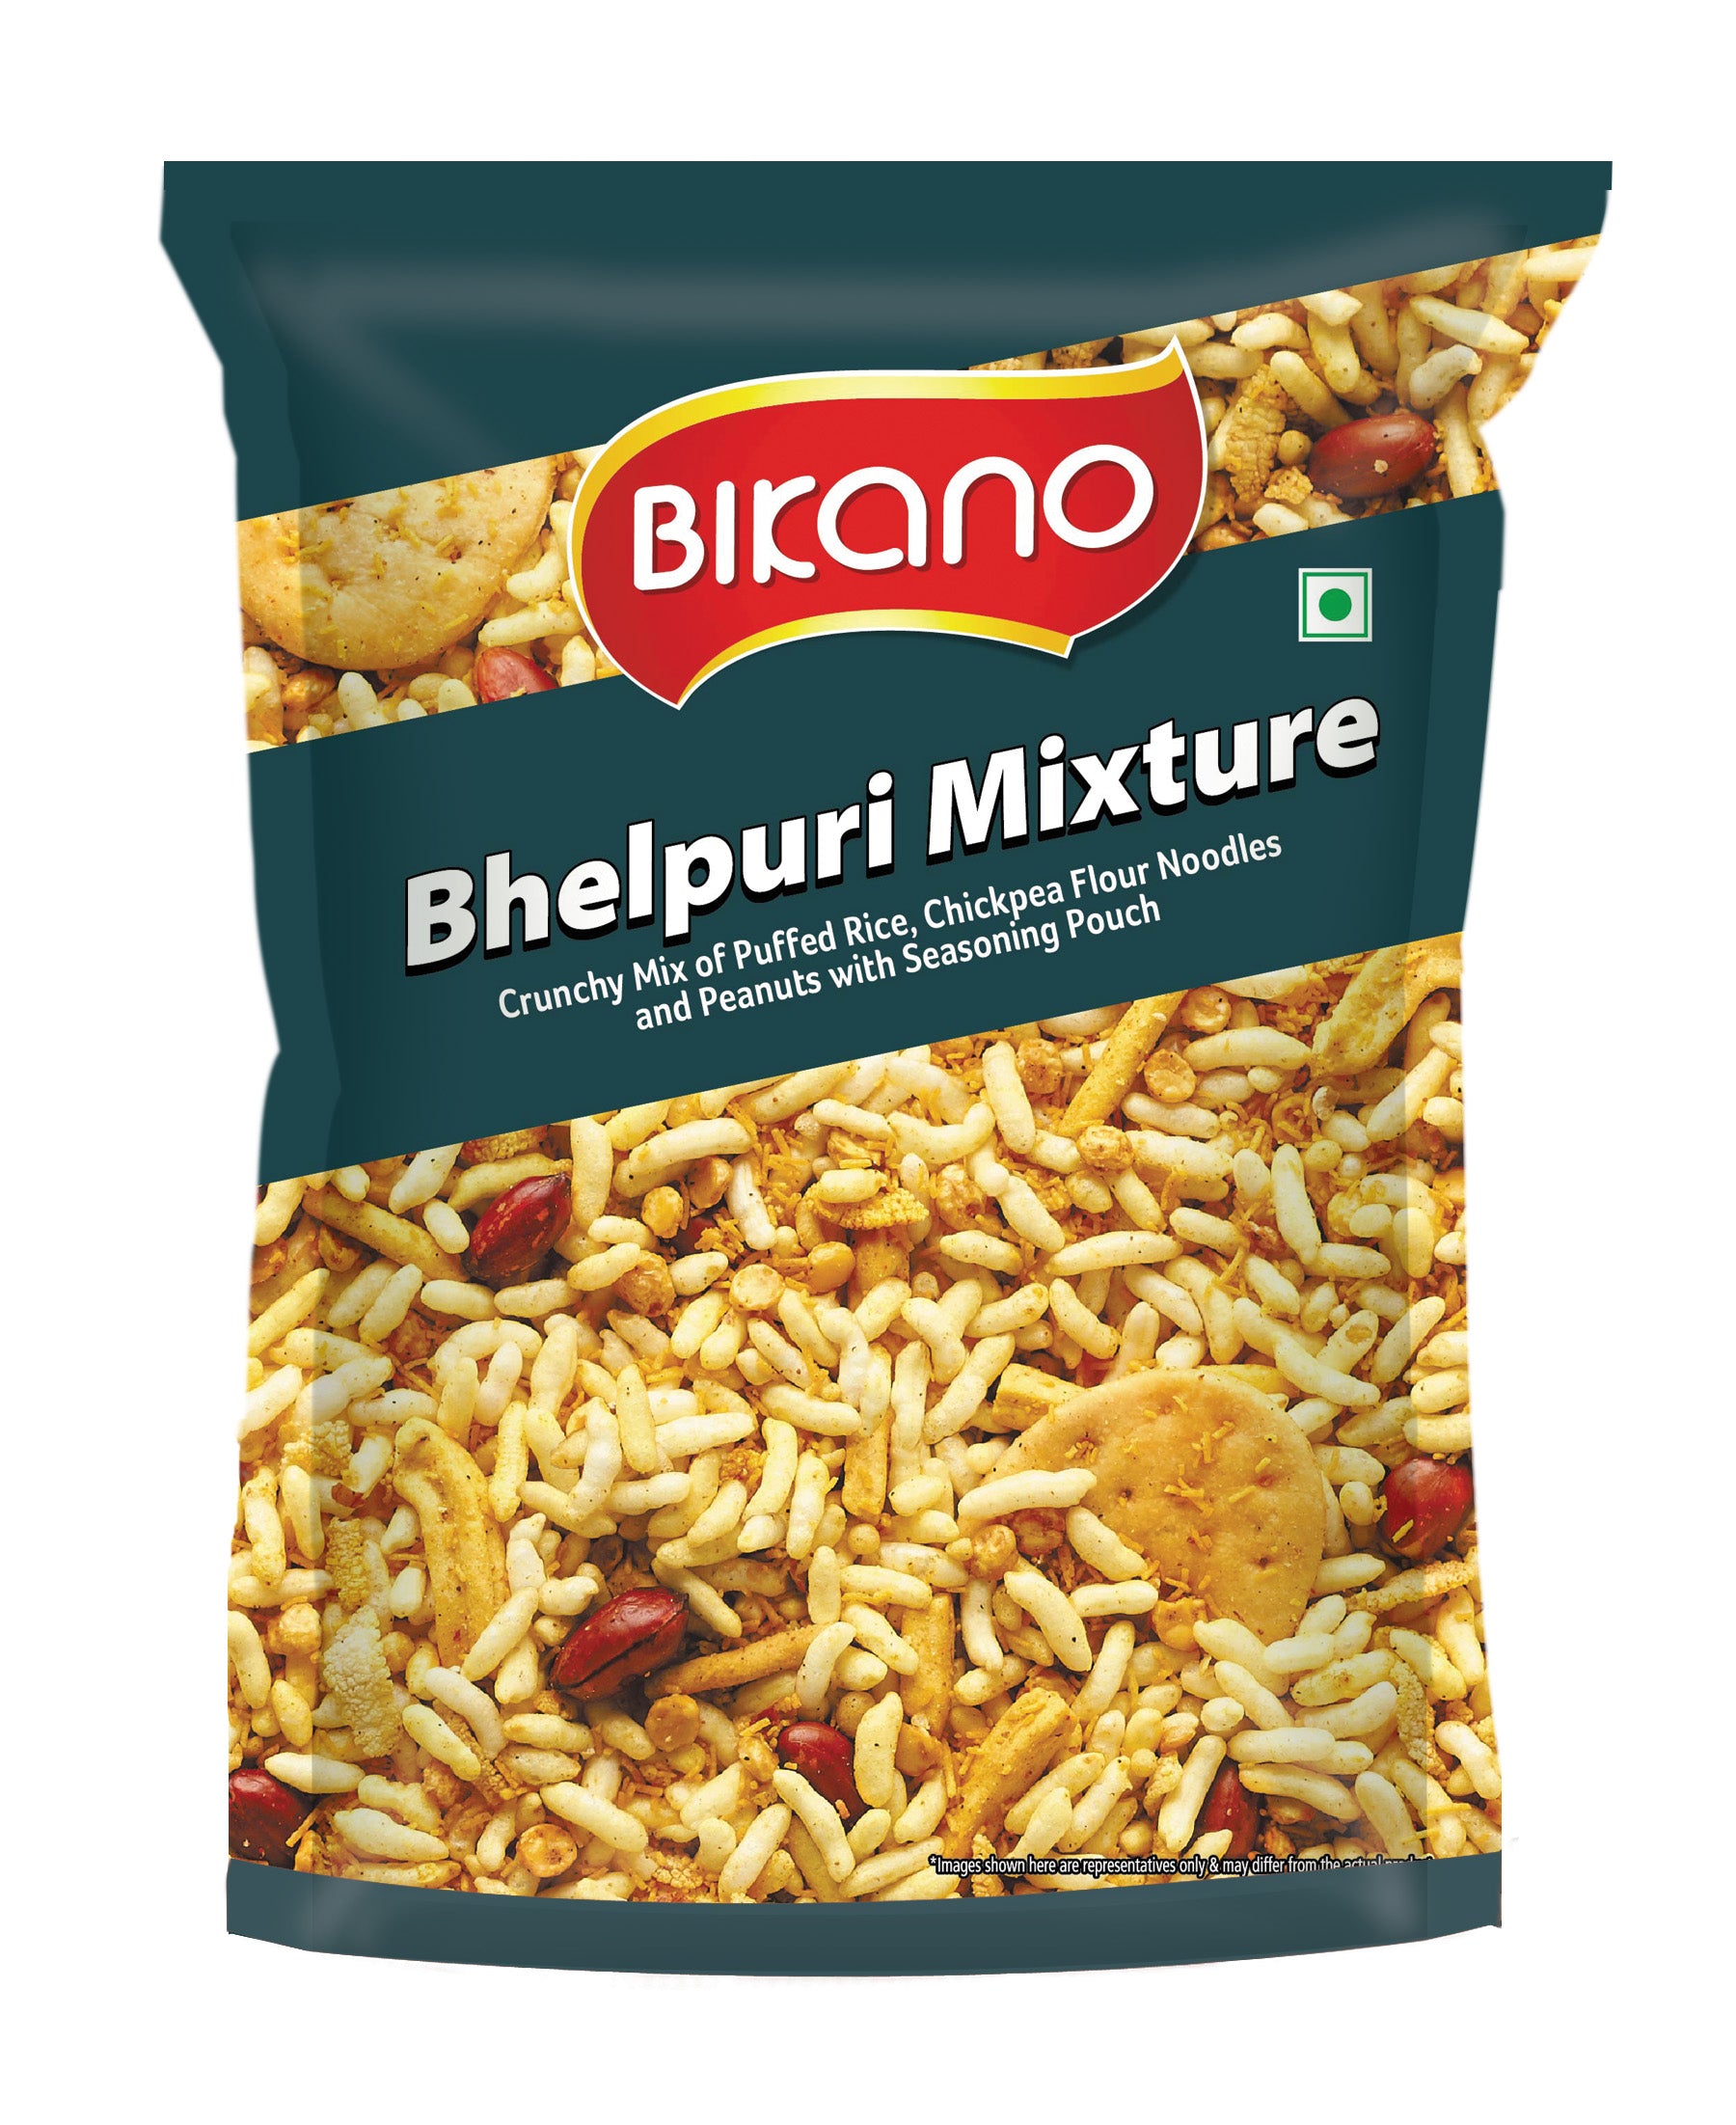 Bikano Bhelpuri